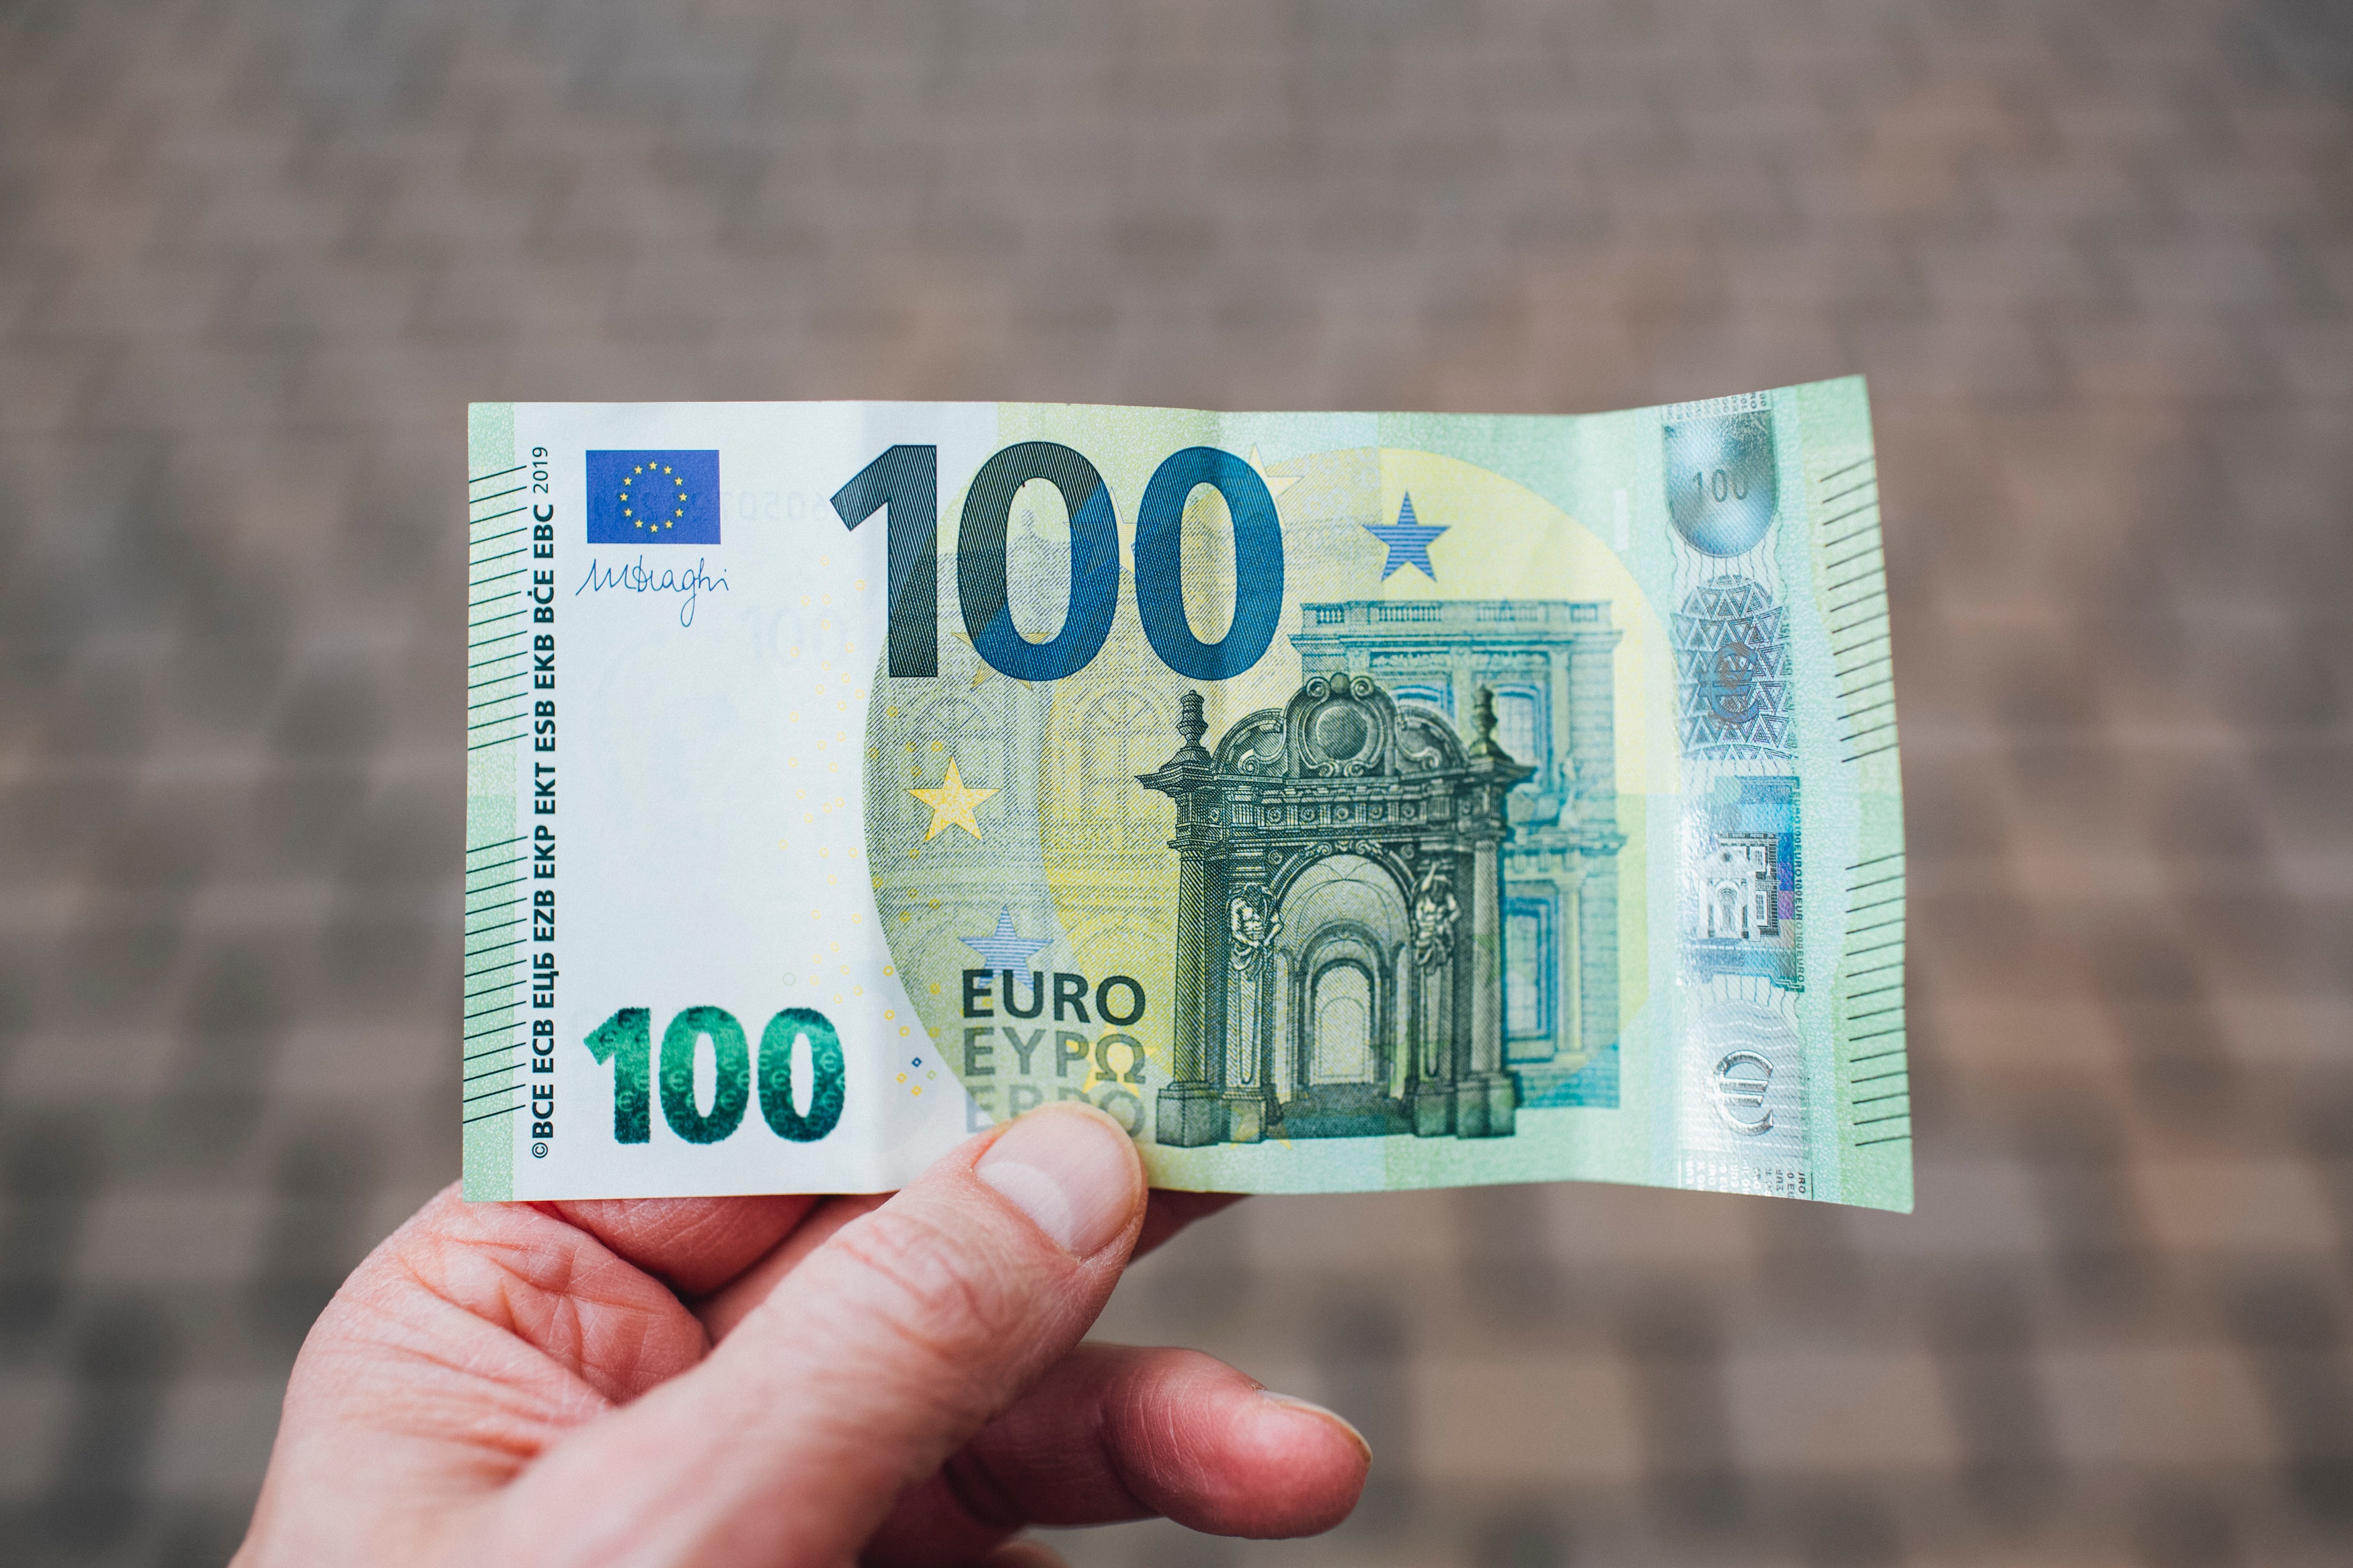 Представитель ЕЦБ: Банкноты евро не представляют риска перенесения COVID-19